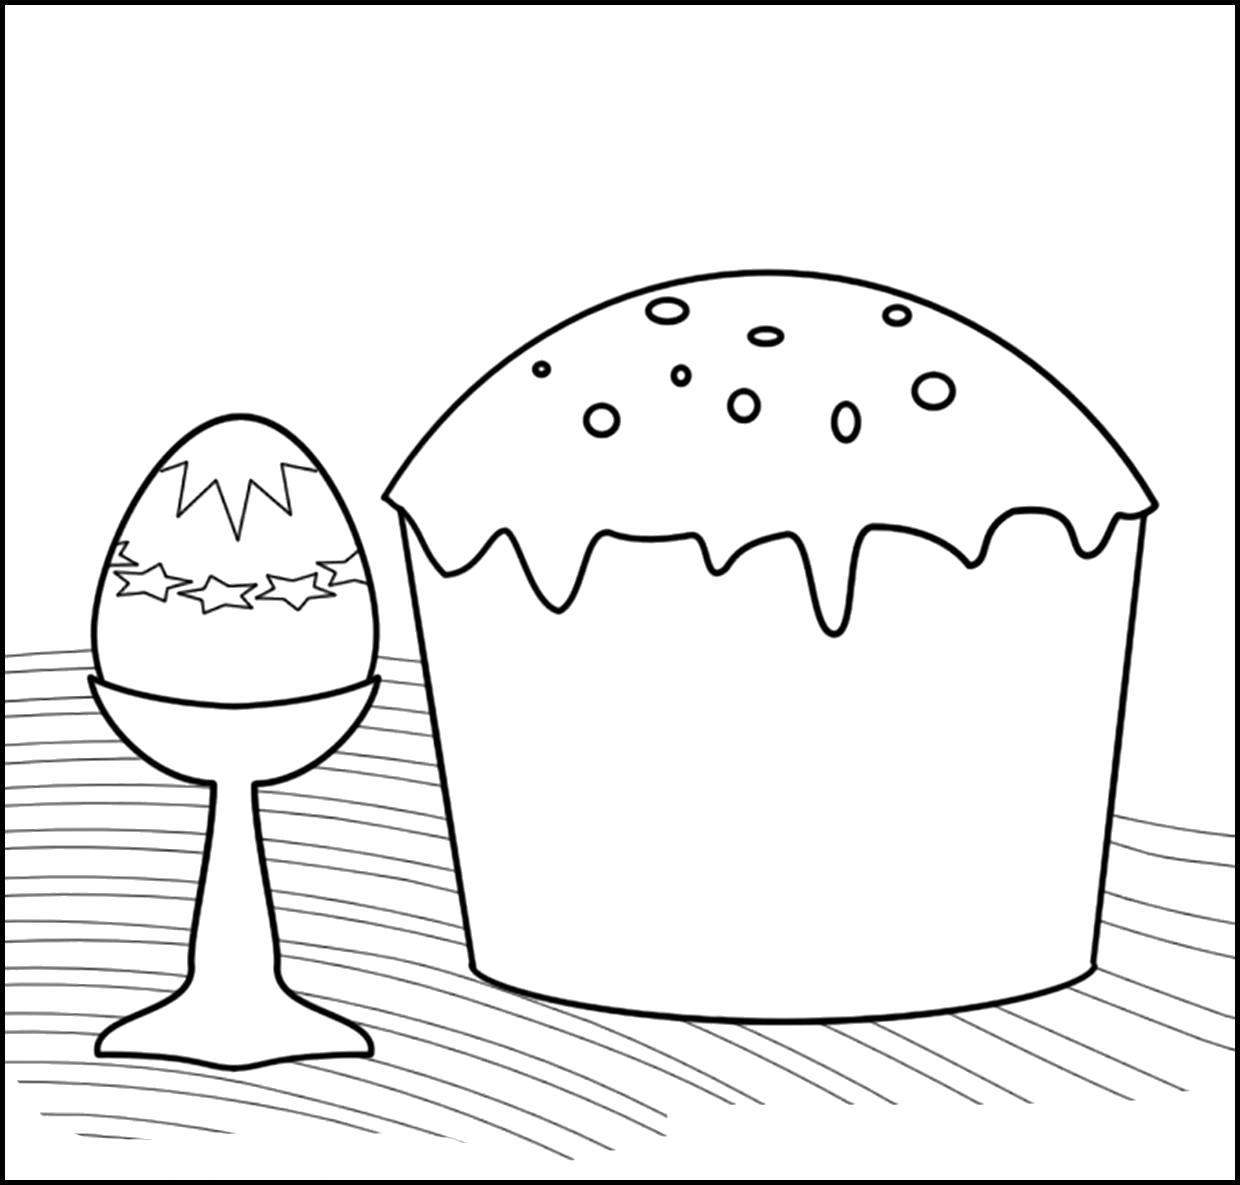 Название: Раскраска яйцо и пасха. Категория: Пасха. Теги: Пасха.